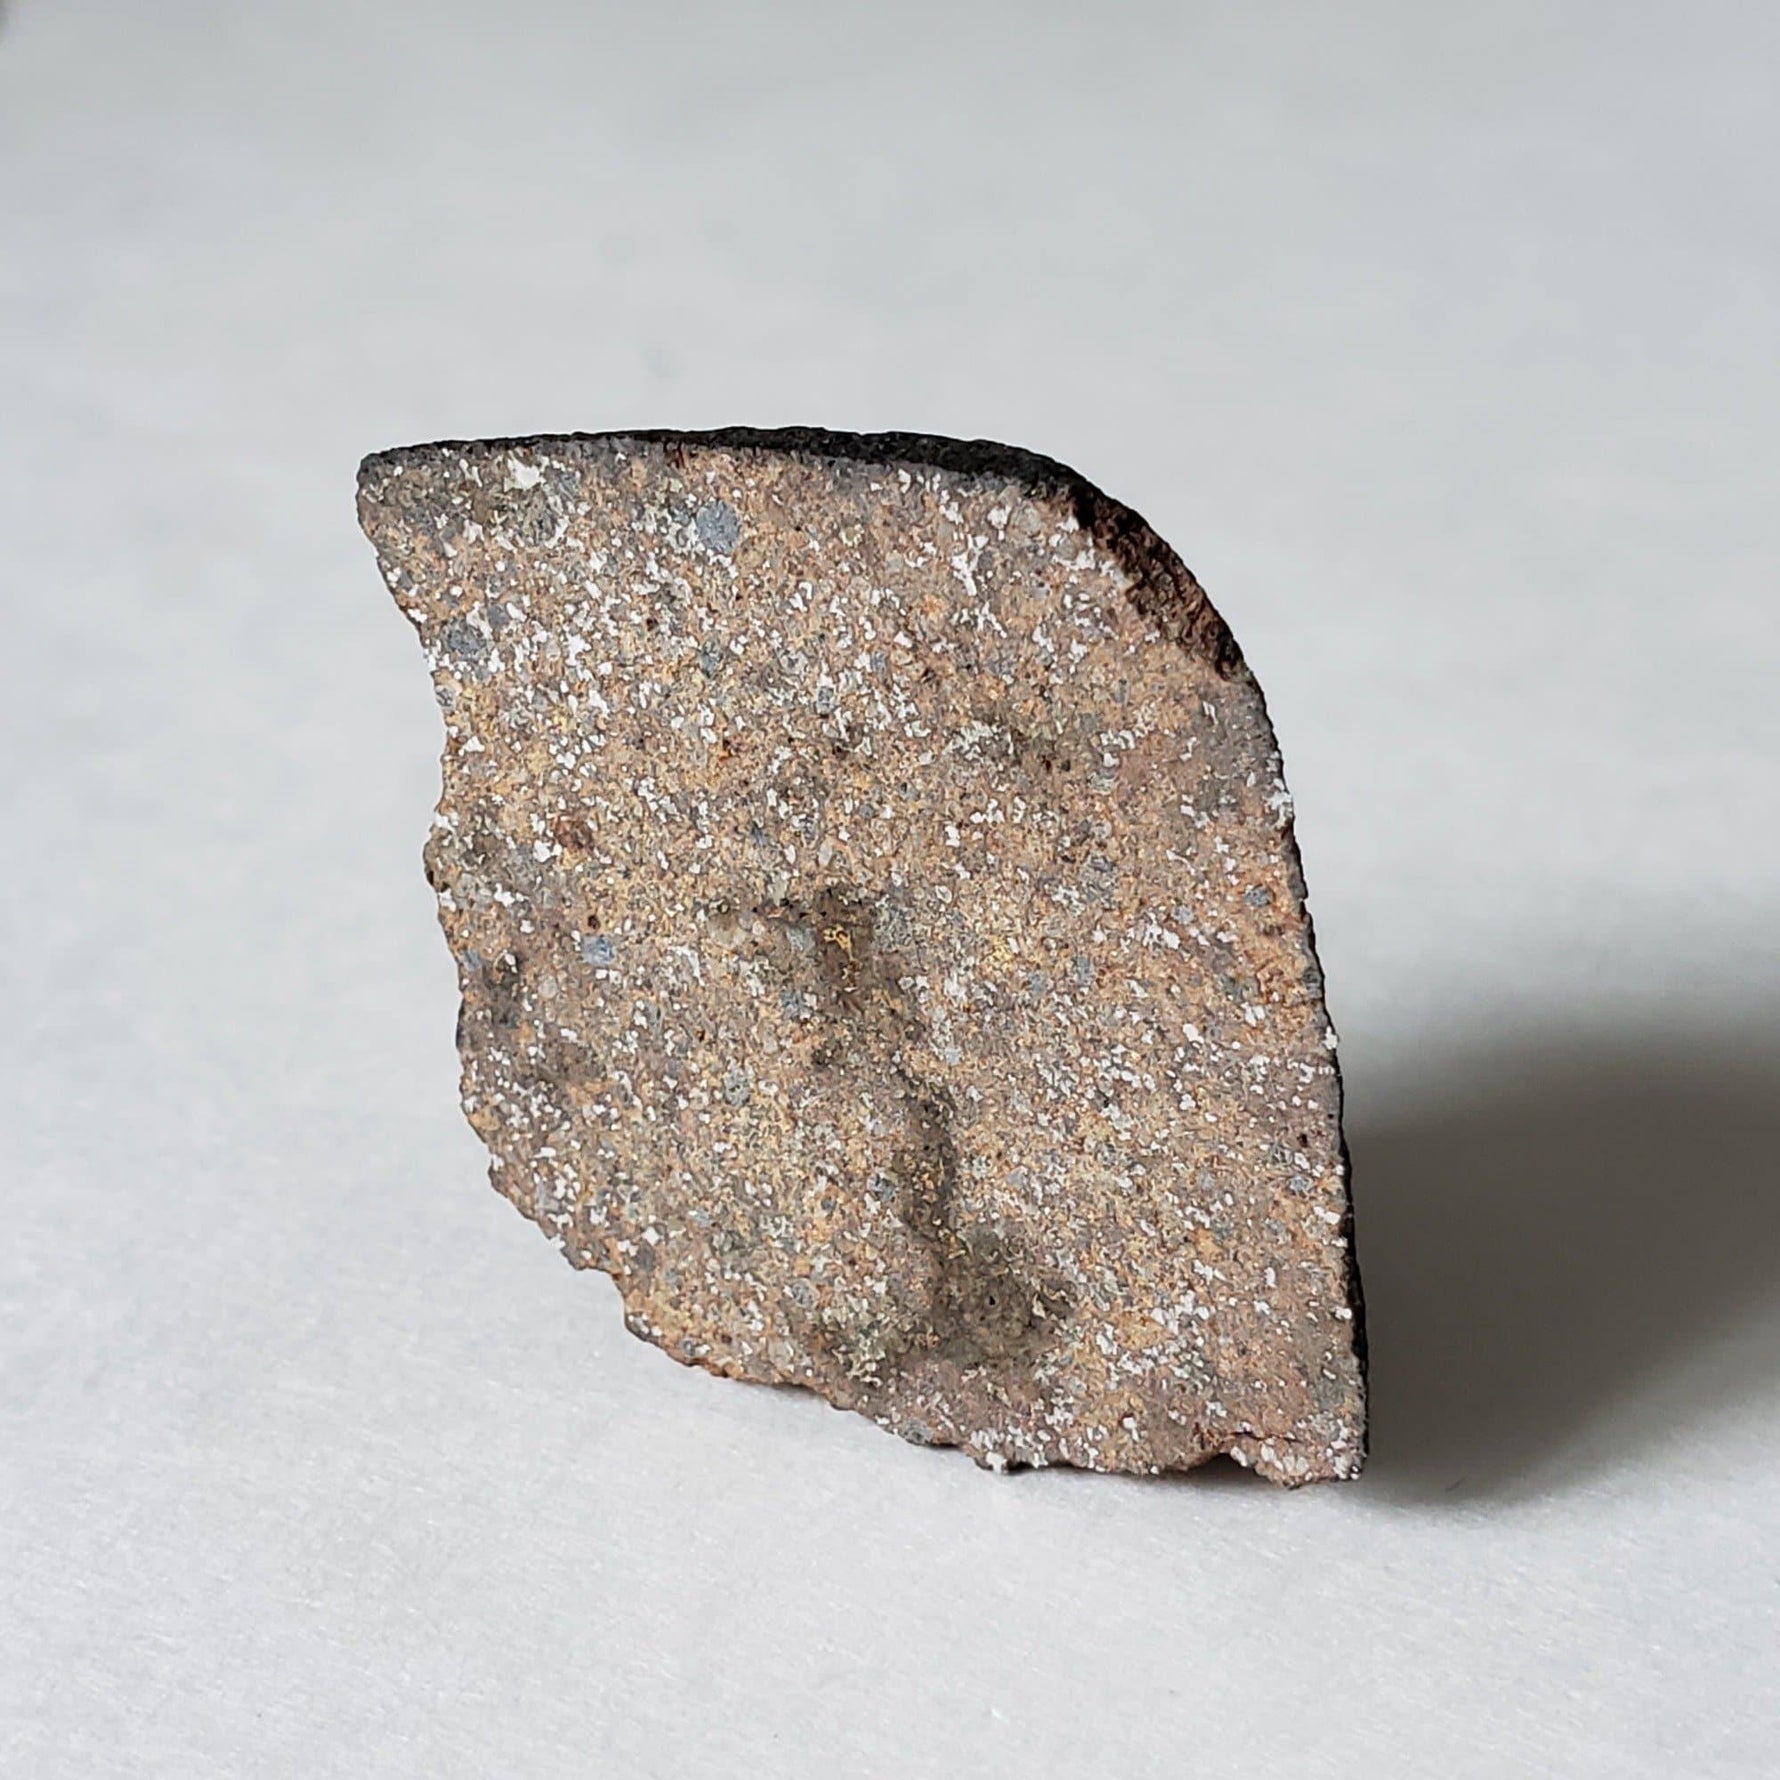 Gao-Guenie Meteorite | 18.98 grams | End Cut | H5 Chondrite | Observed Fall | Burkina Faso